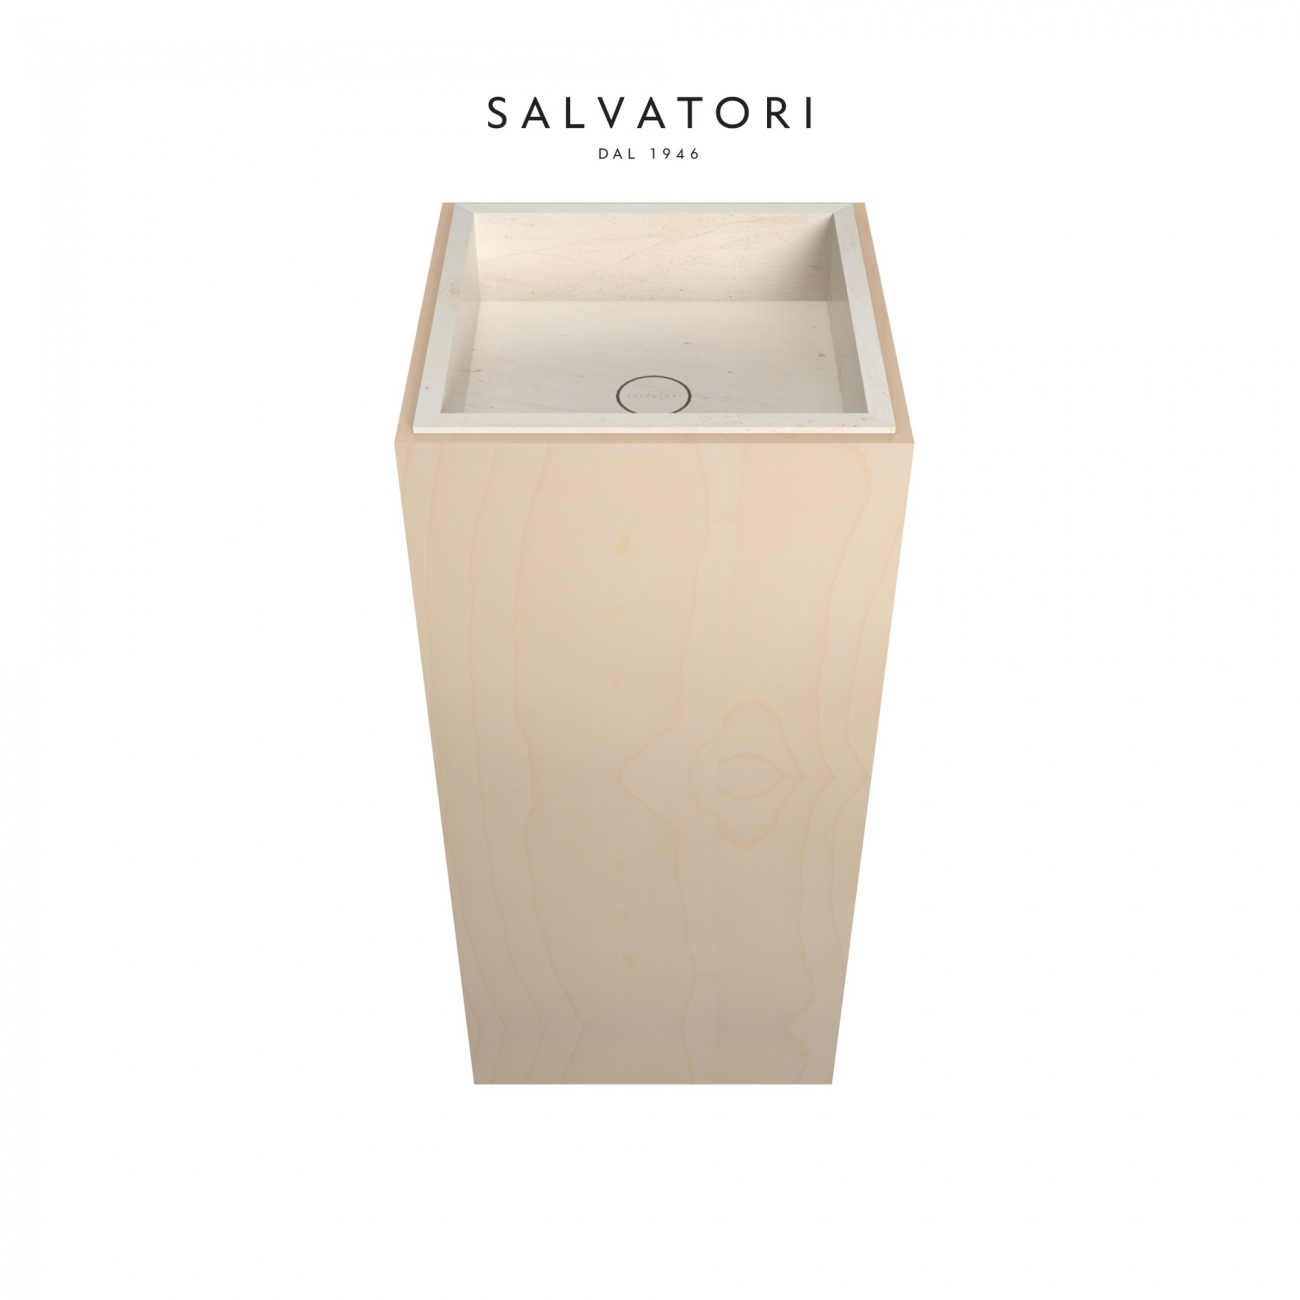 Salvatori Adda Lavabo Freestanding Acero 41X41